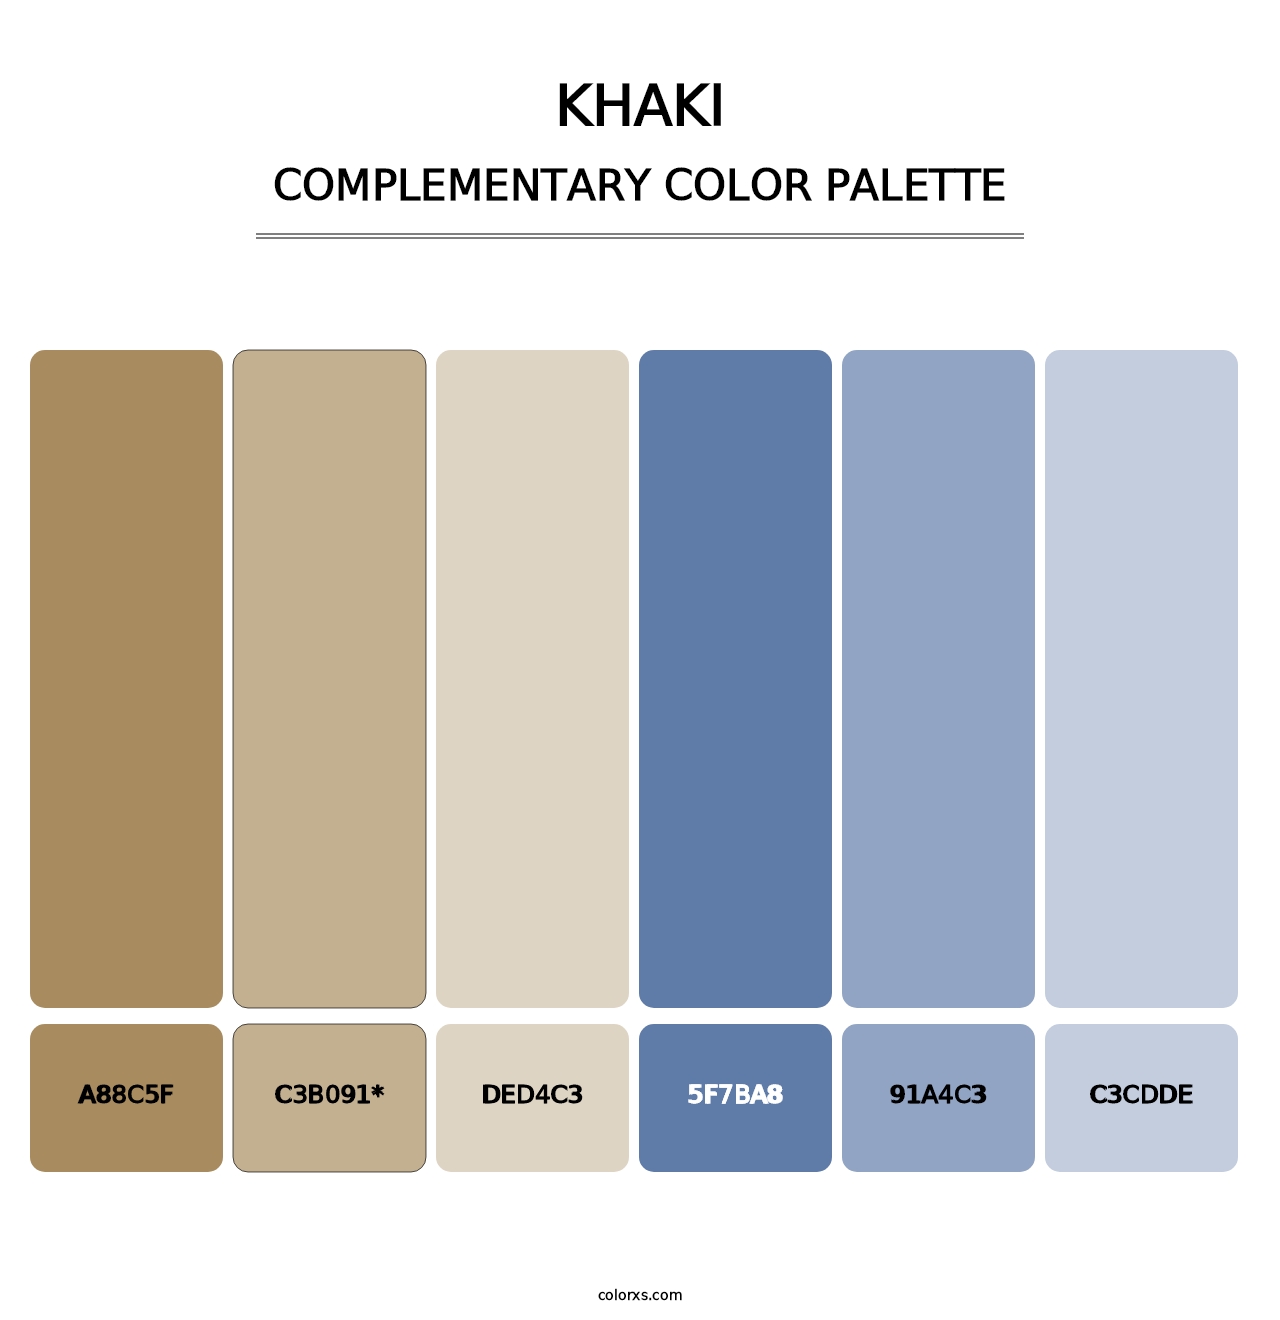 Khaki - Complementary Color Palette